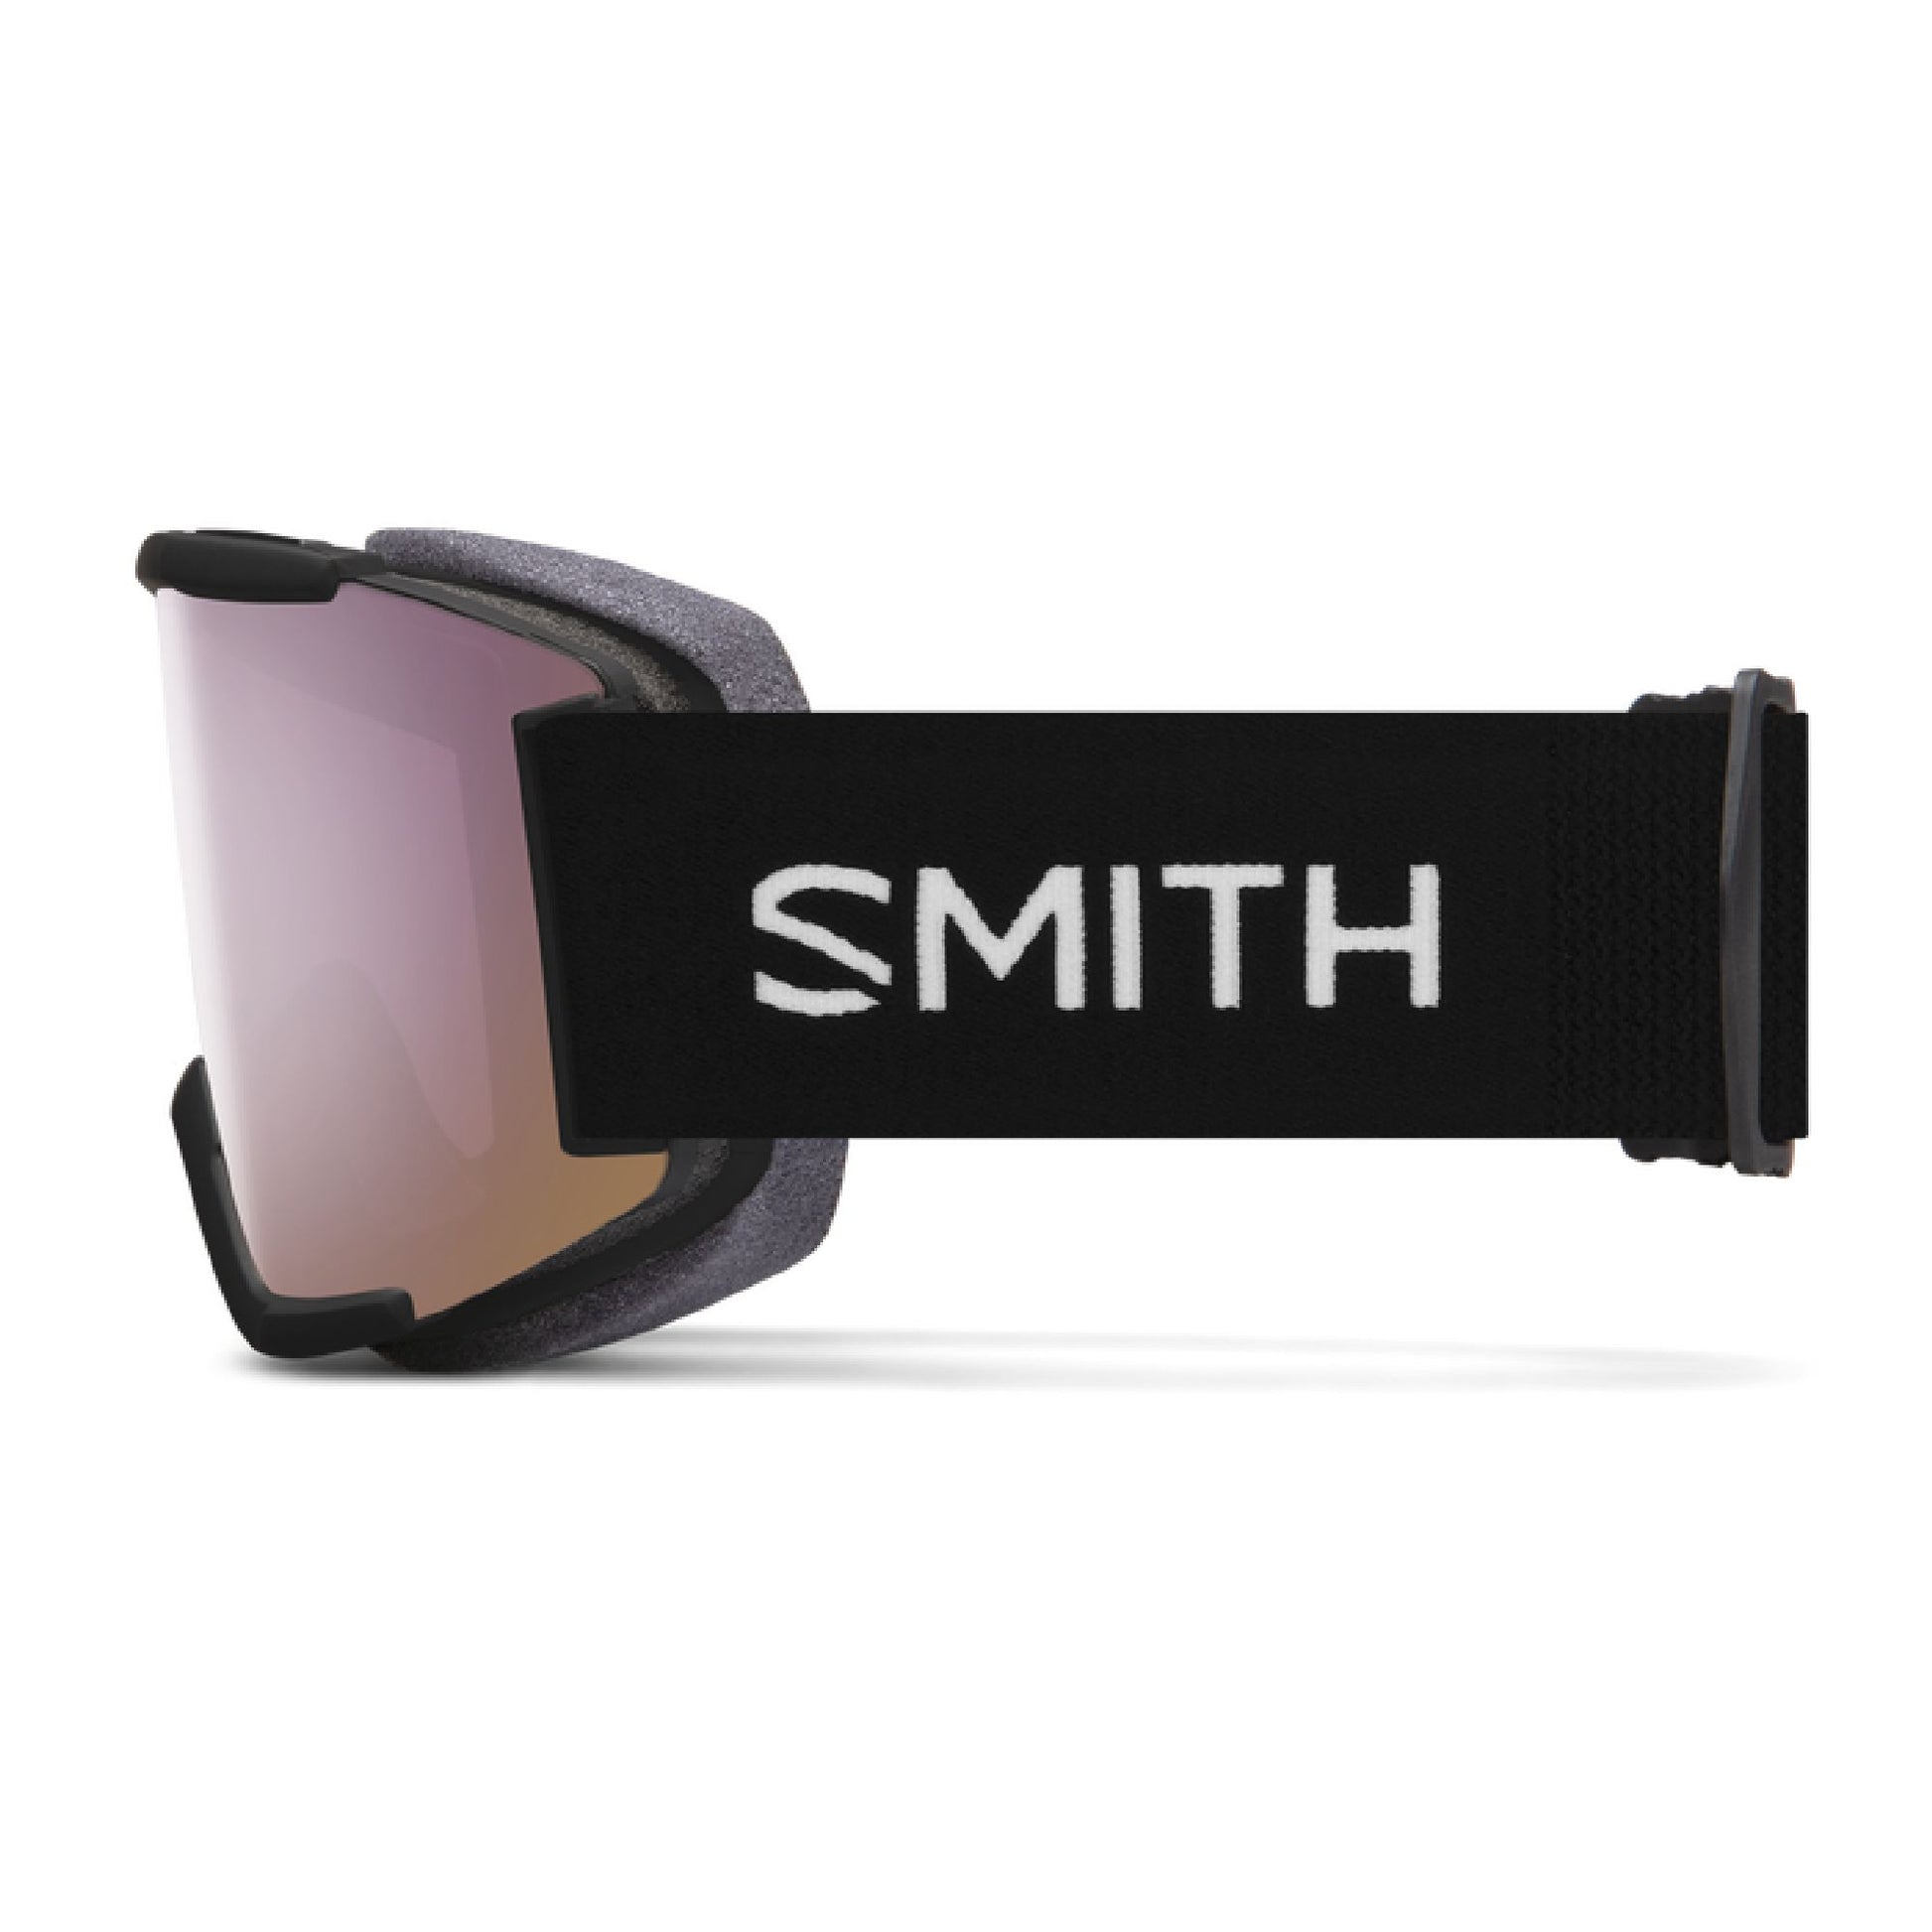 Smith Squad Snow Goggle Black / ChromaPop Everyday Rose Gold Mirror Snow Goggles